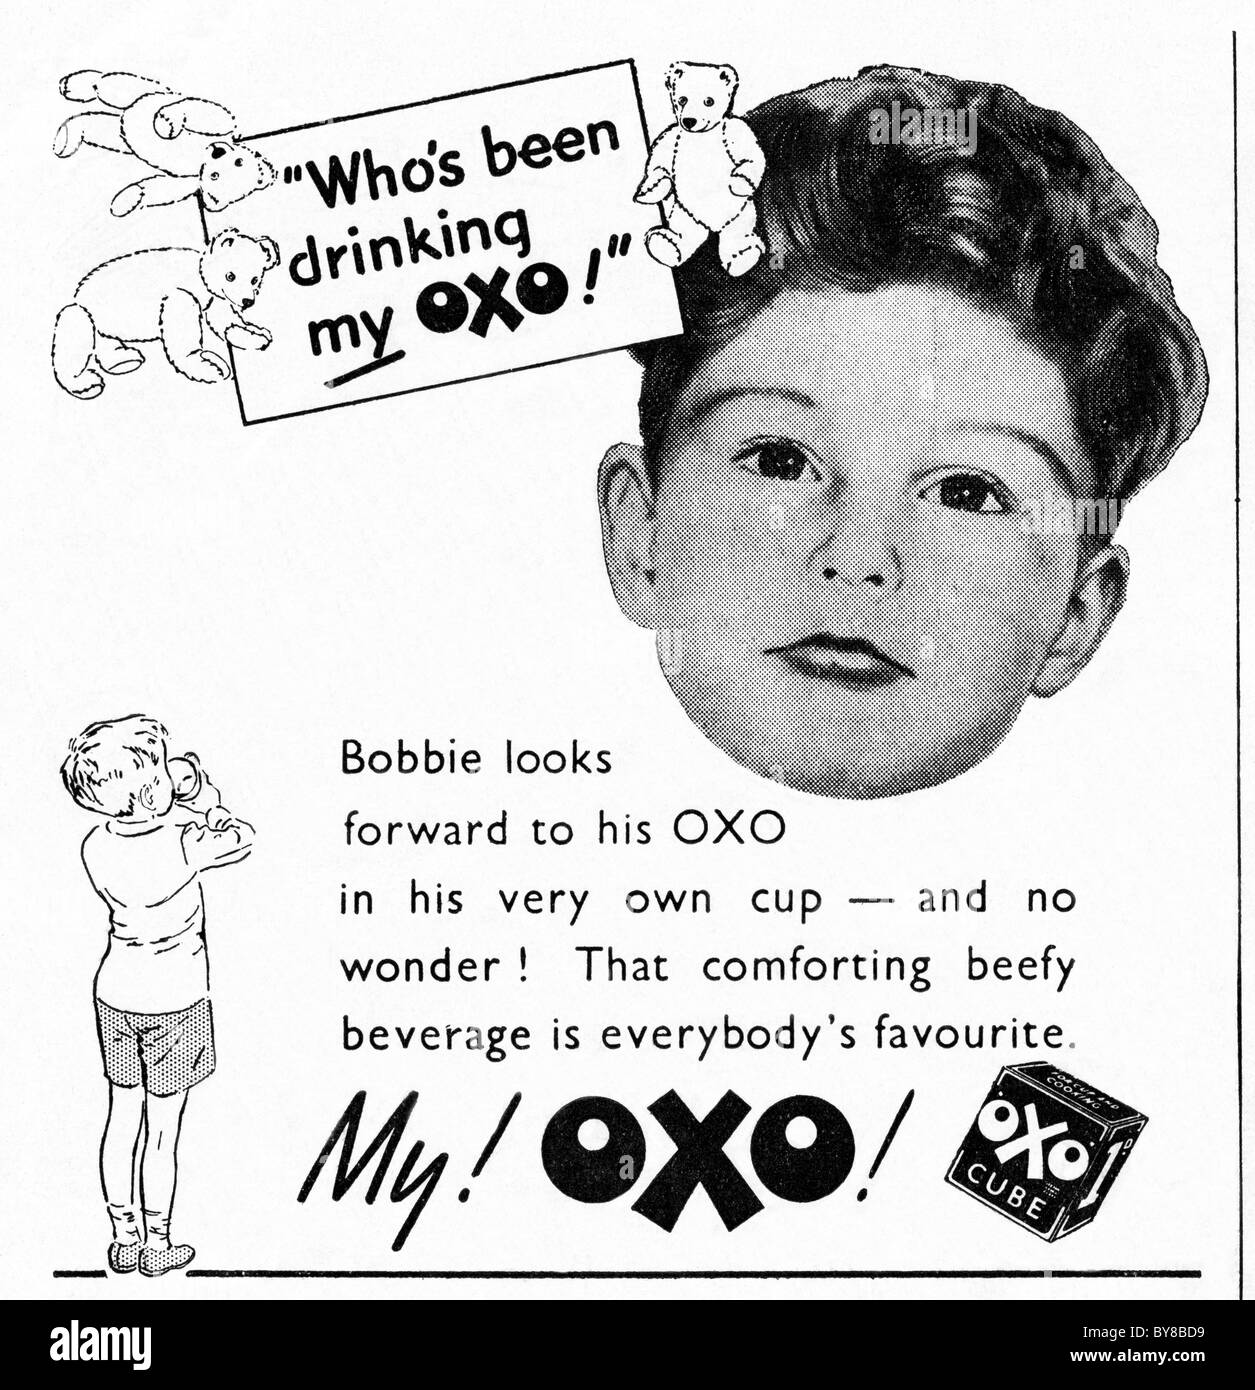 OXO cubes hanging advertisement - Ruby Lane